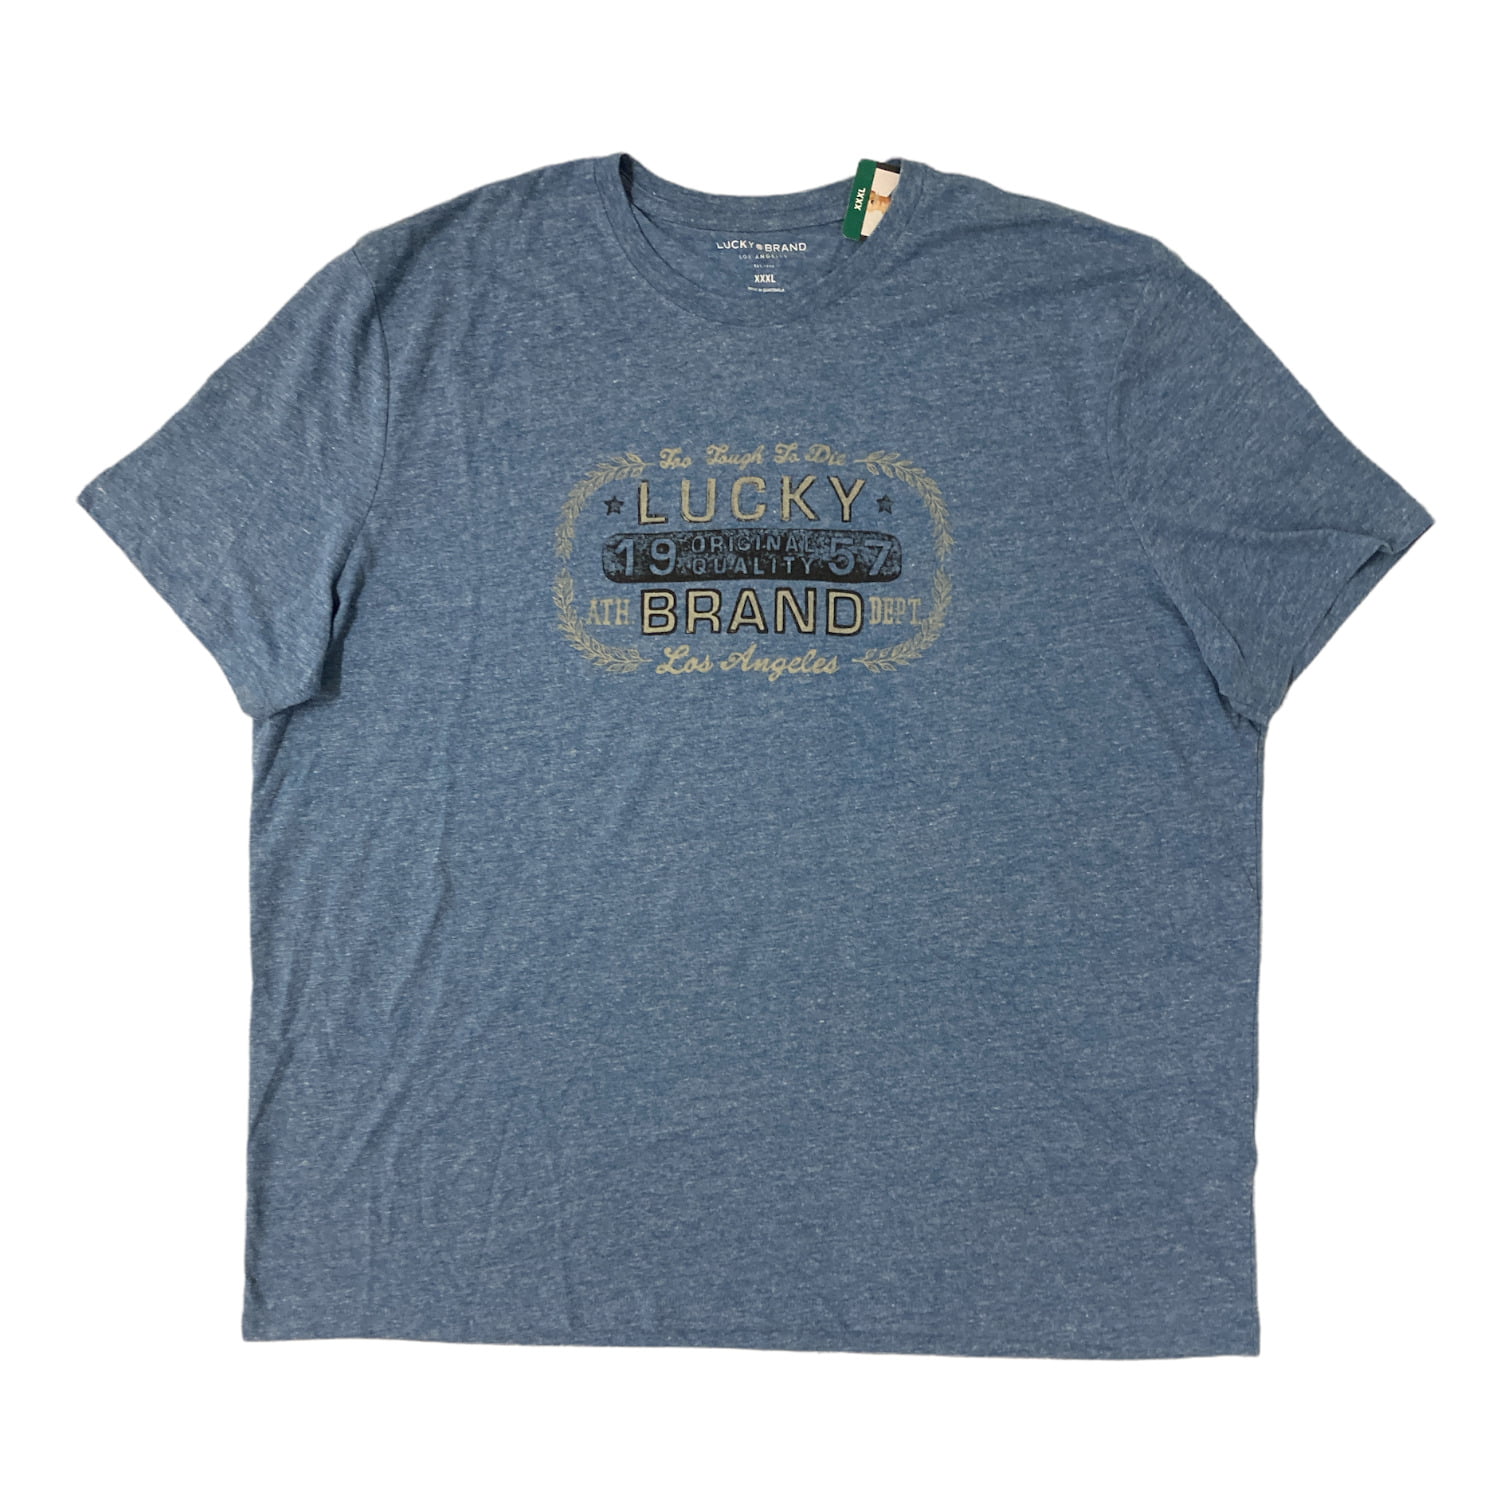 Lucky Brand Men's Lightweight Short Sleeve Graphic T-Shirt (Dark Olive, S)  